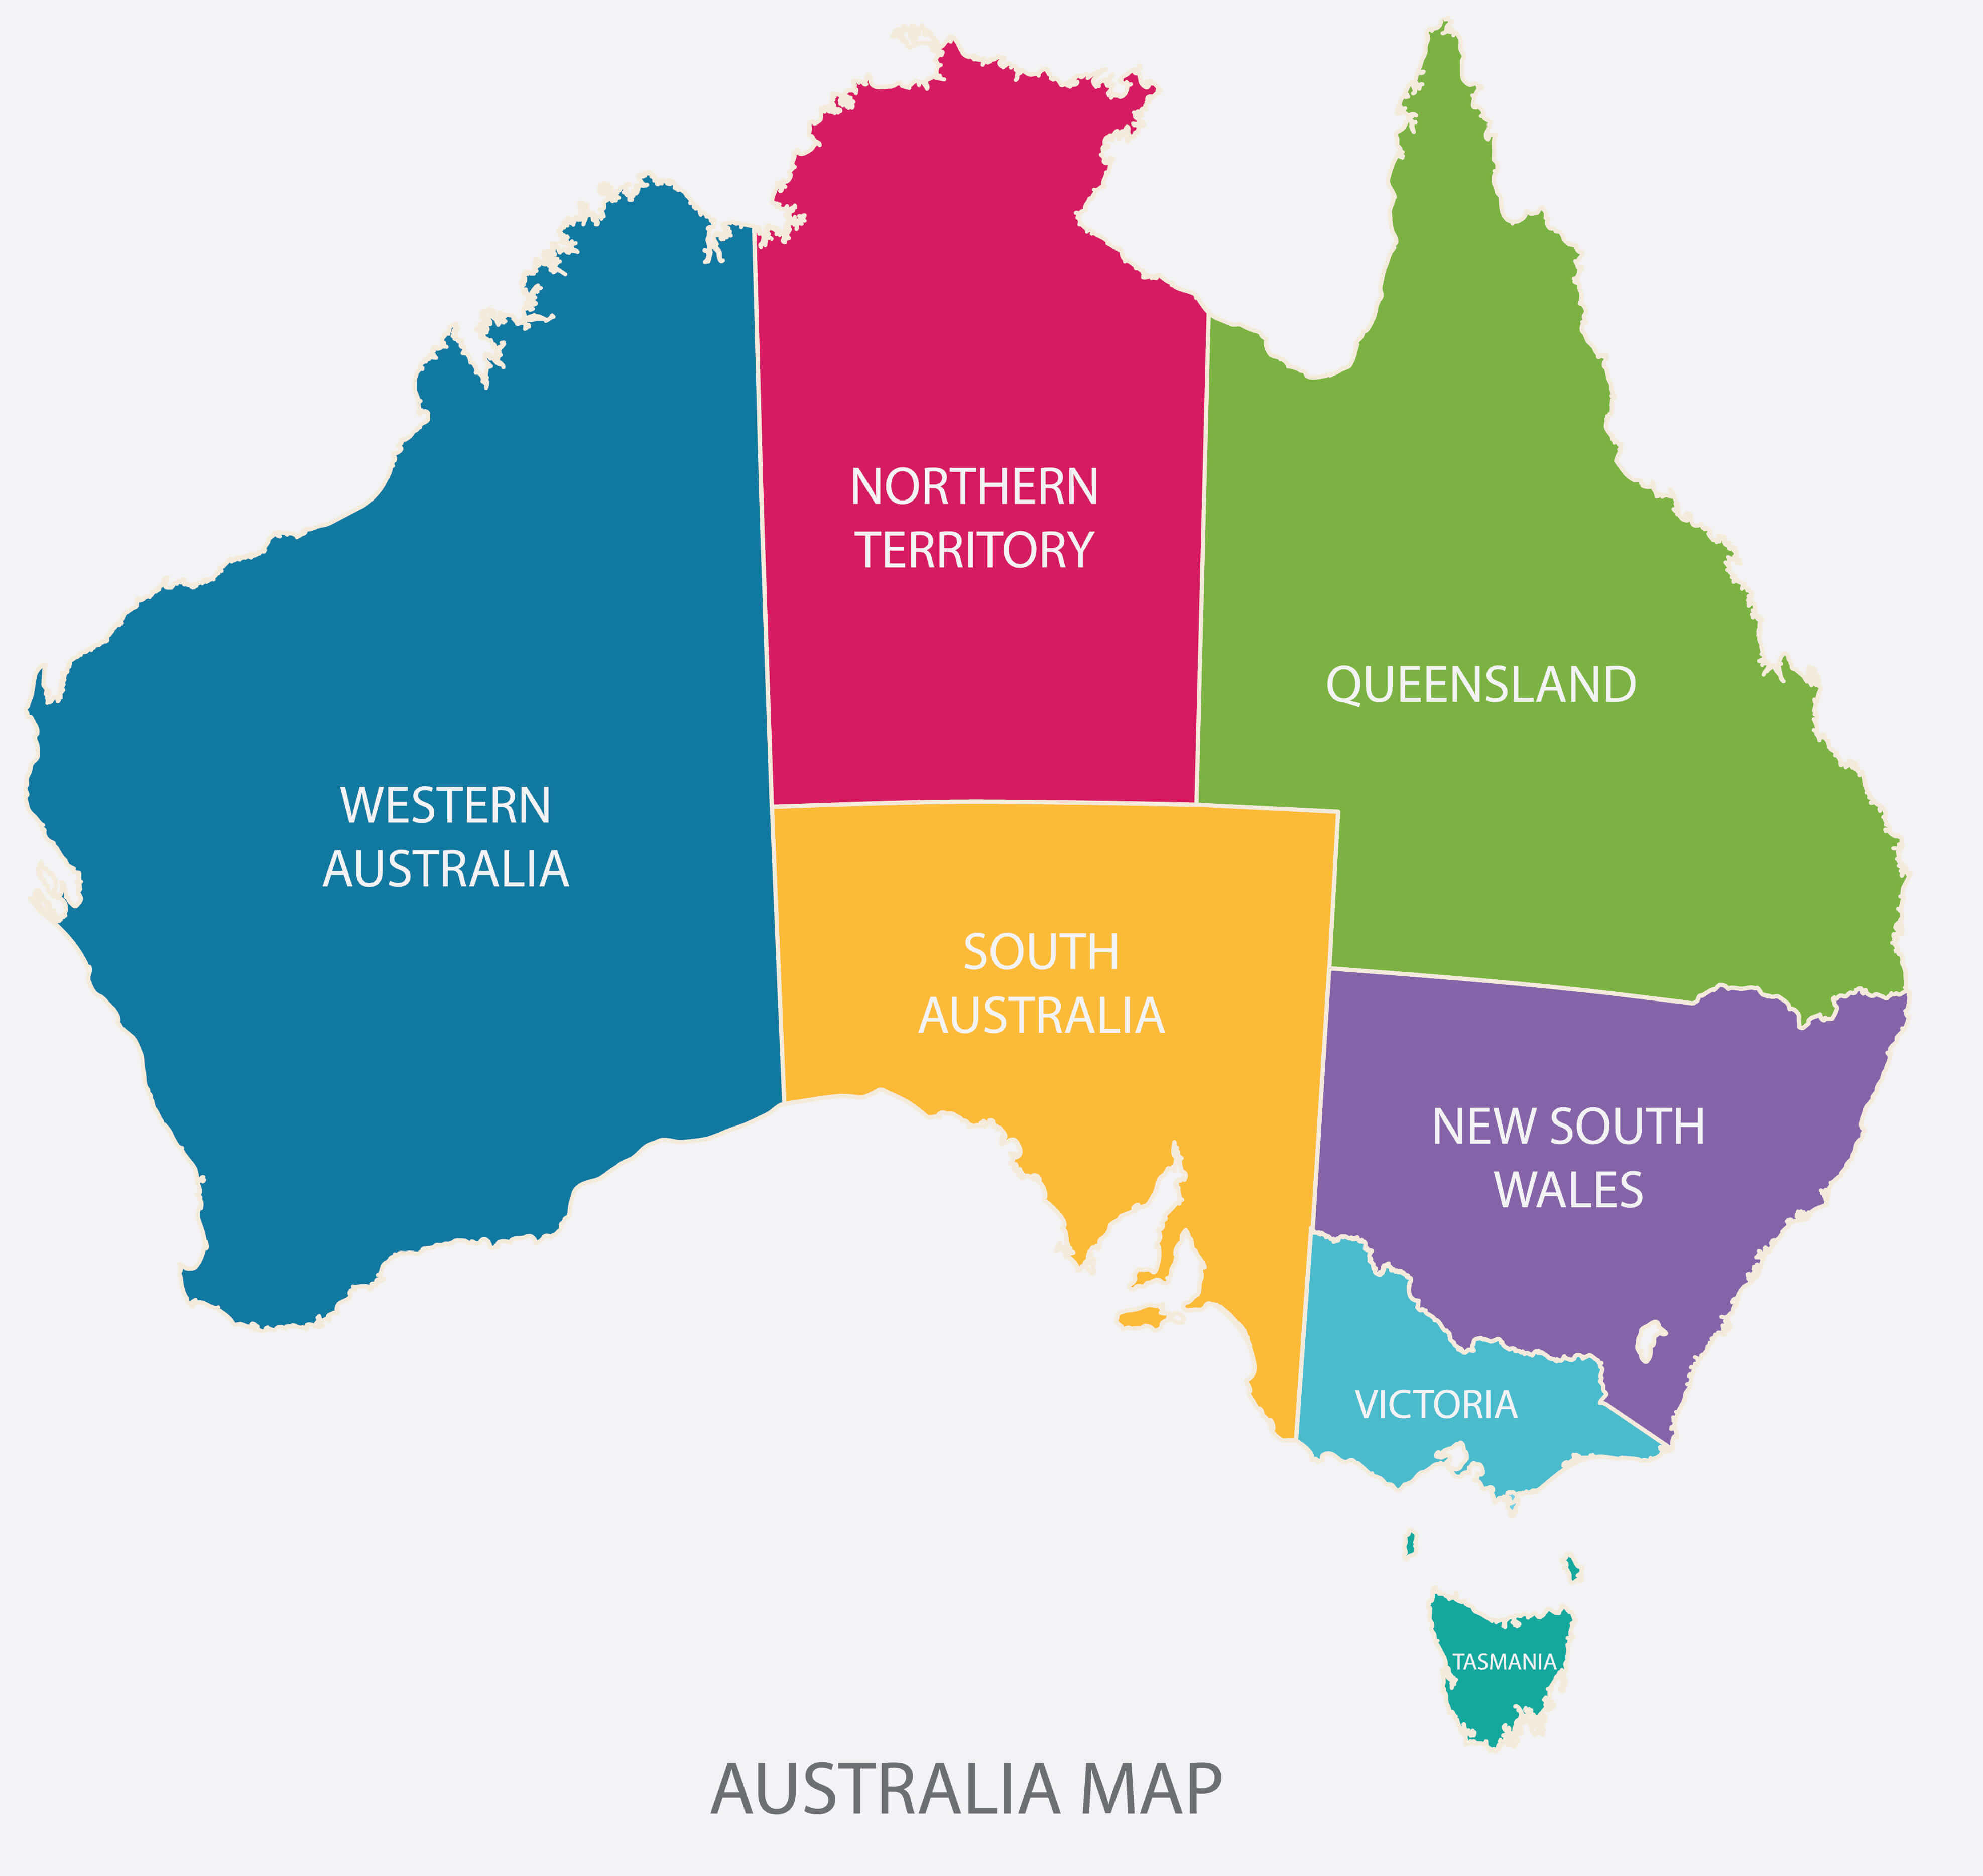 Australia Map with Regions